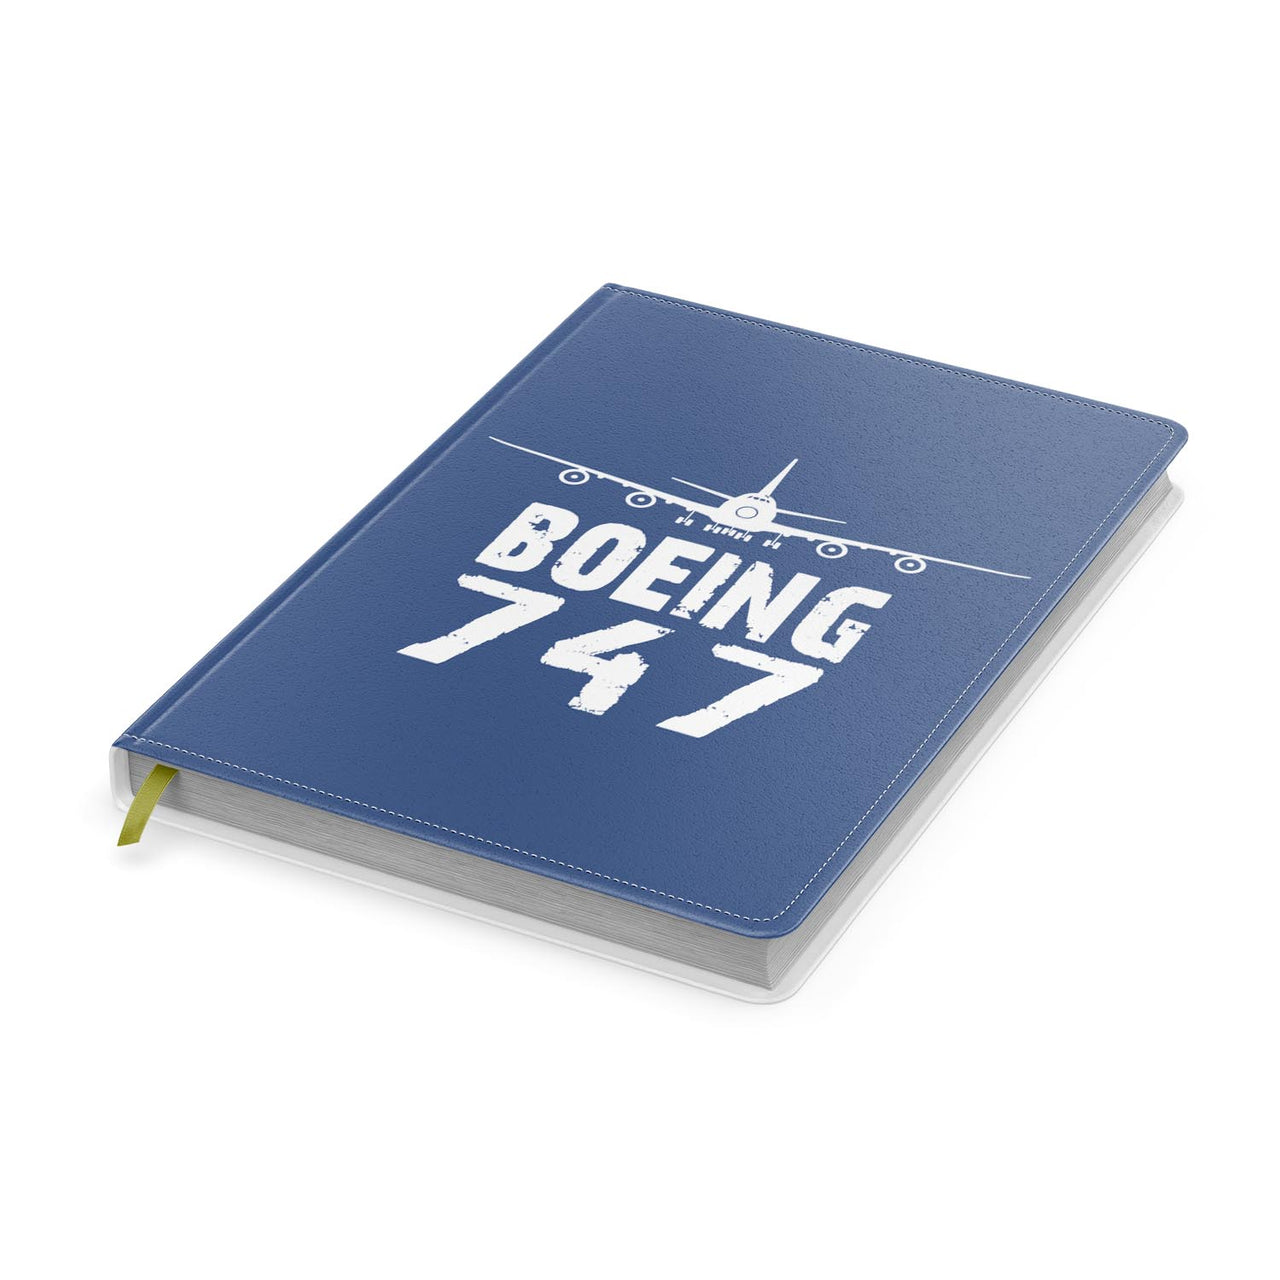 Boeing 747 & Plane Designed Notebooks